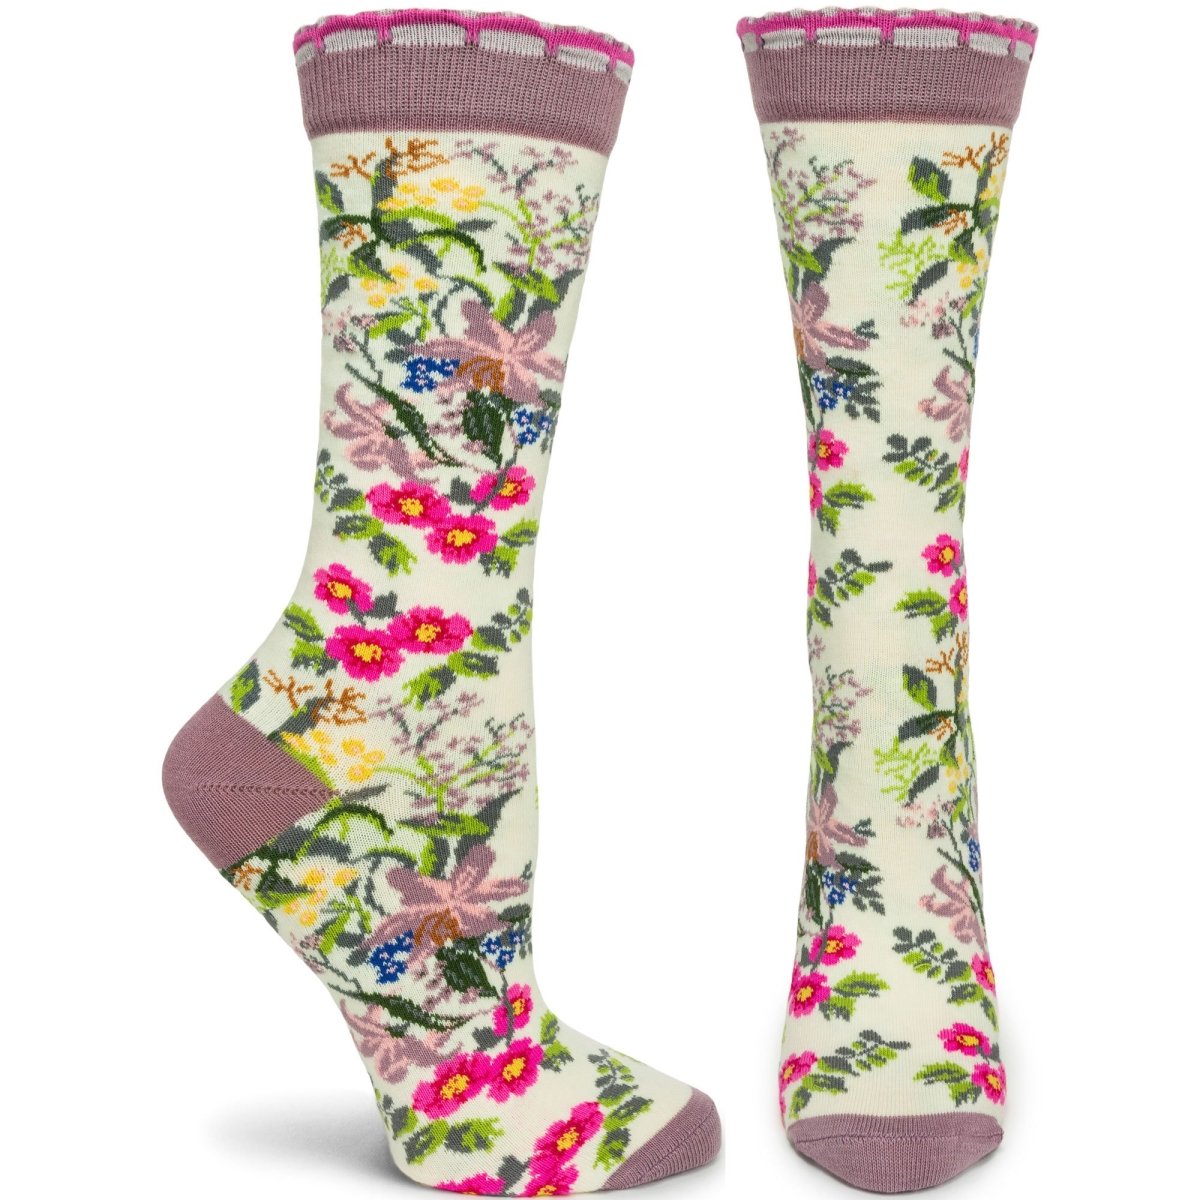 Women's Ozone Honeysuckle Socks - Cream Multi Floral Print